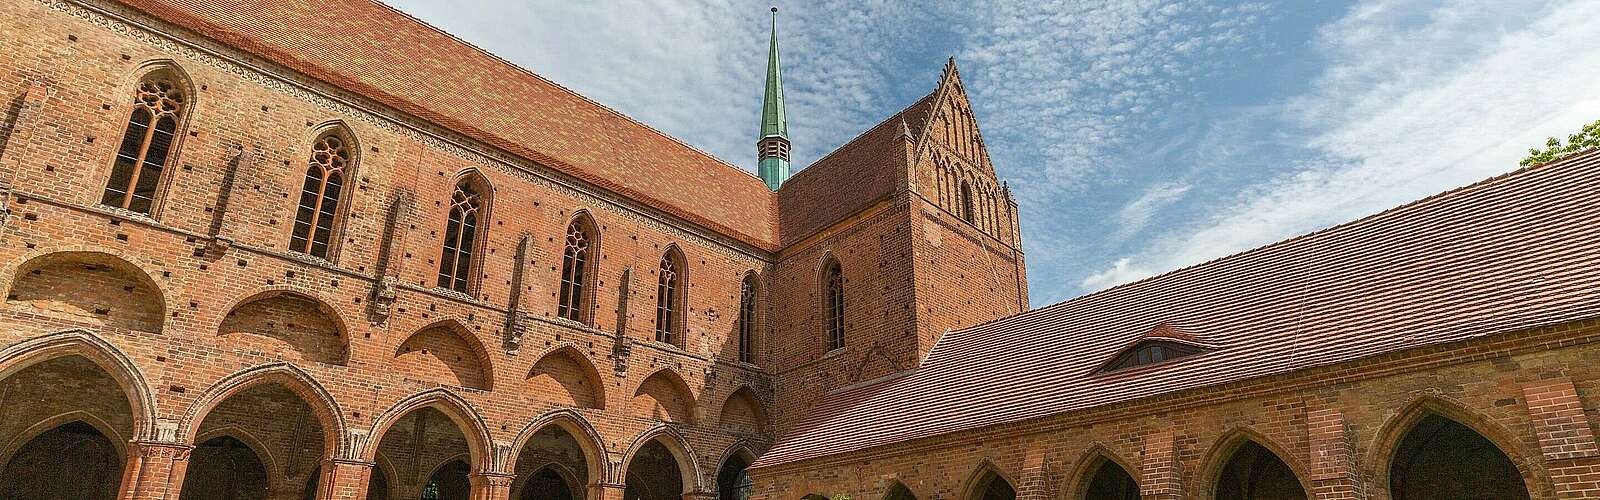 Kloster Chorin,
        
    

        Foto: Fotograf / Lizenz - Media Import/Steffen Lehmann